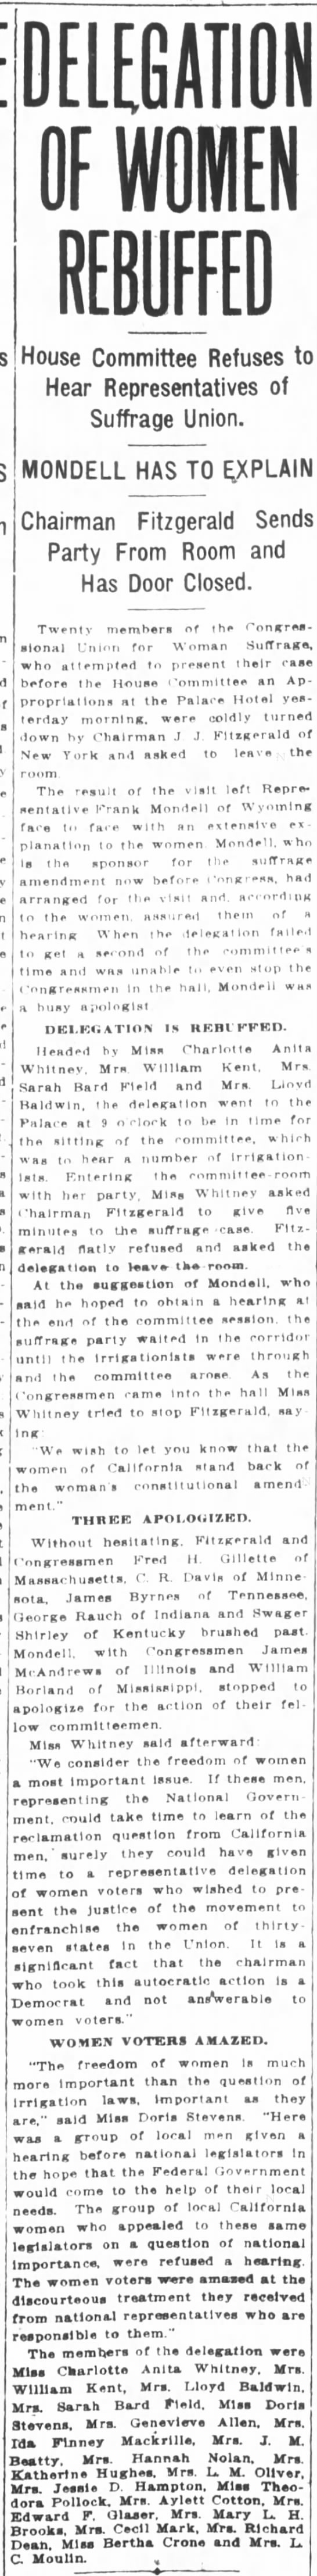 Delegation of Women Rebuffed, San Francisco Chronicle (San Francisco, California) 18 June 1915, p 1 - 